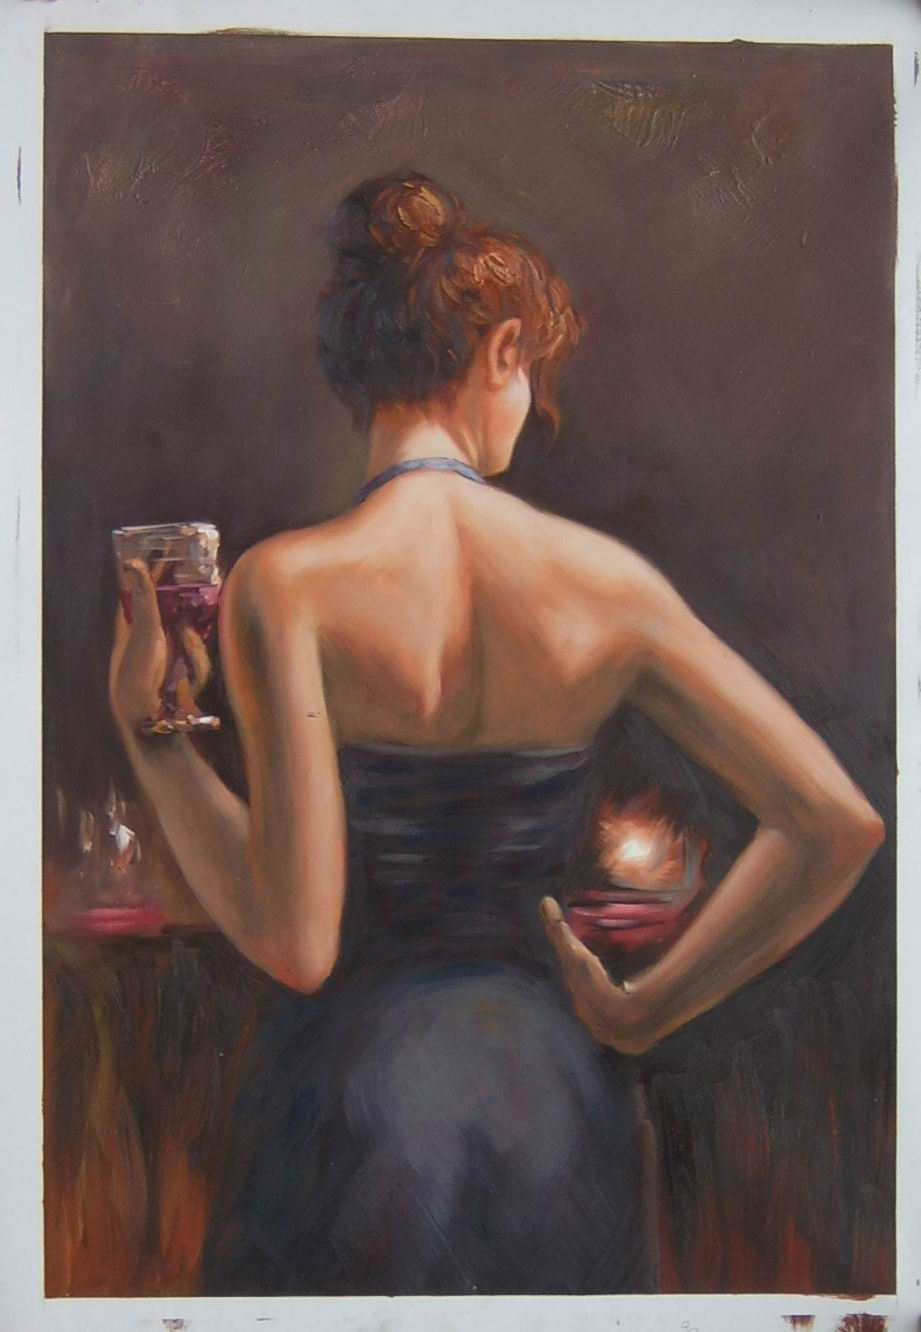 China bar girl oil paintings (JBN01) on sale